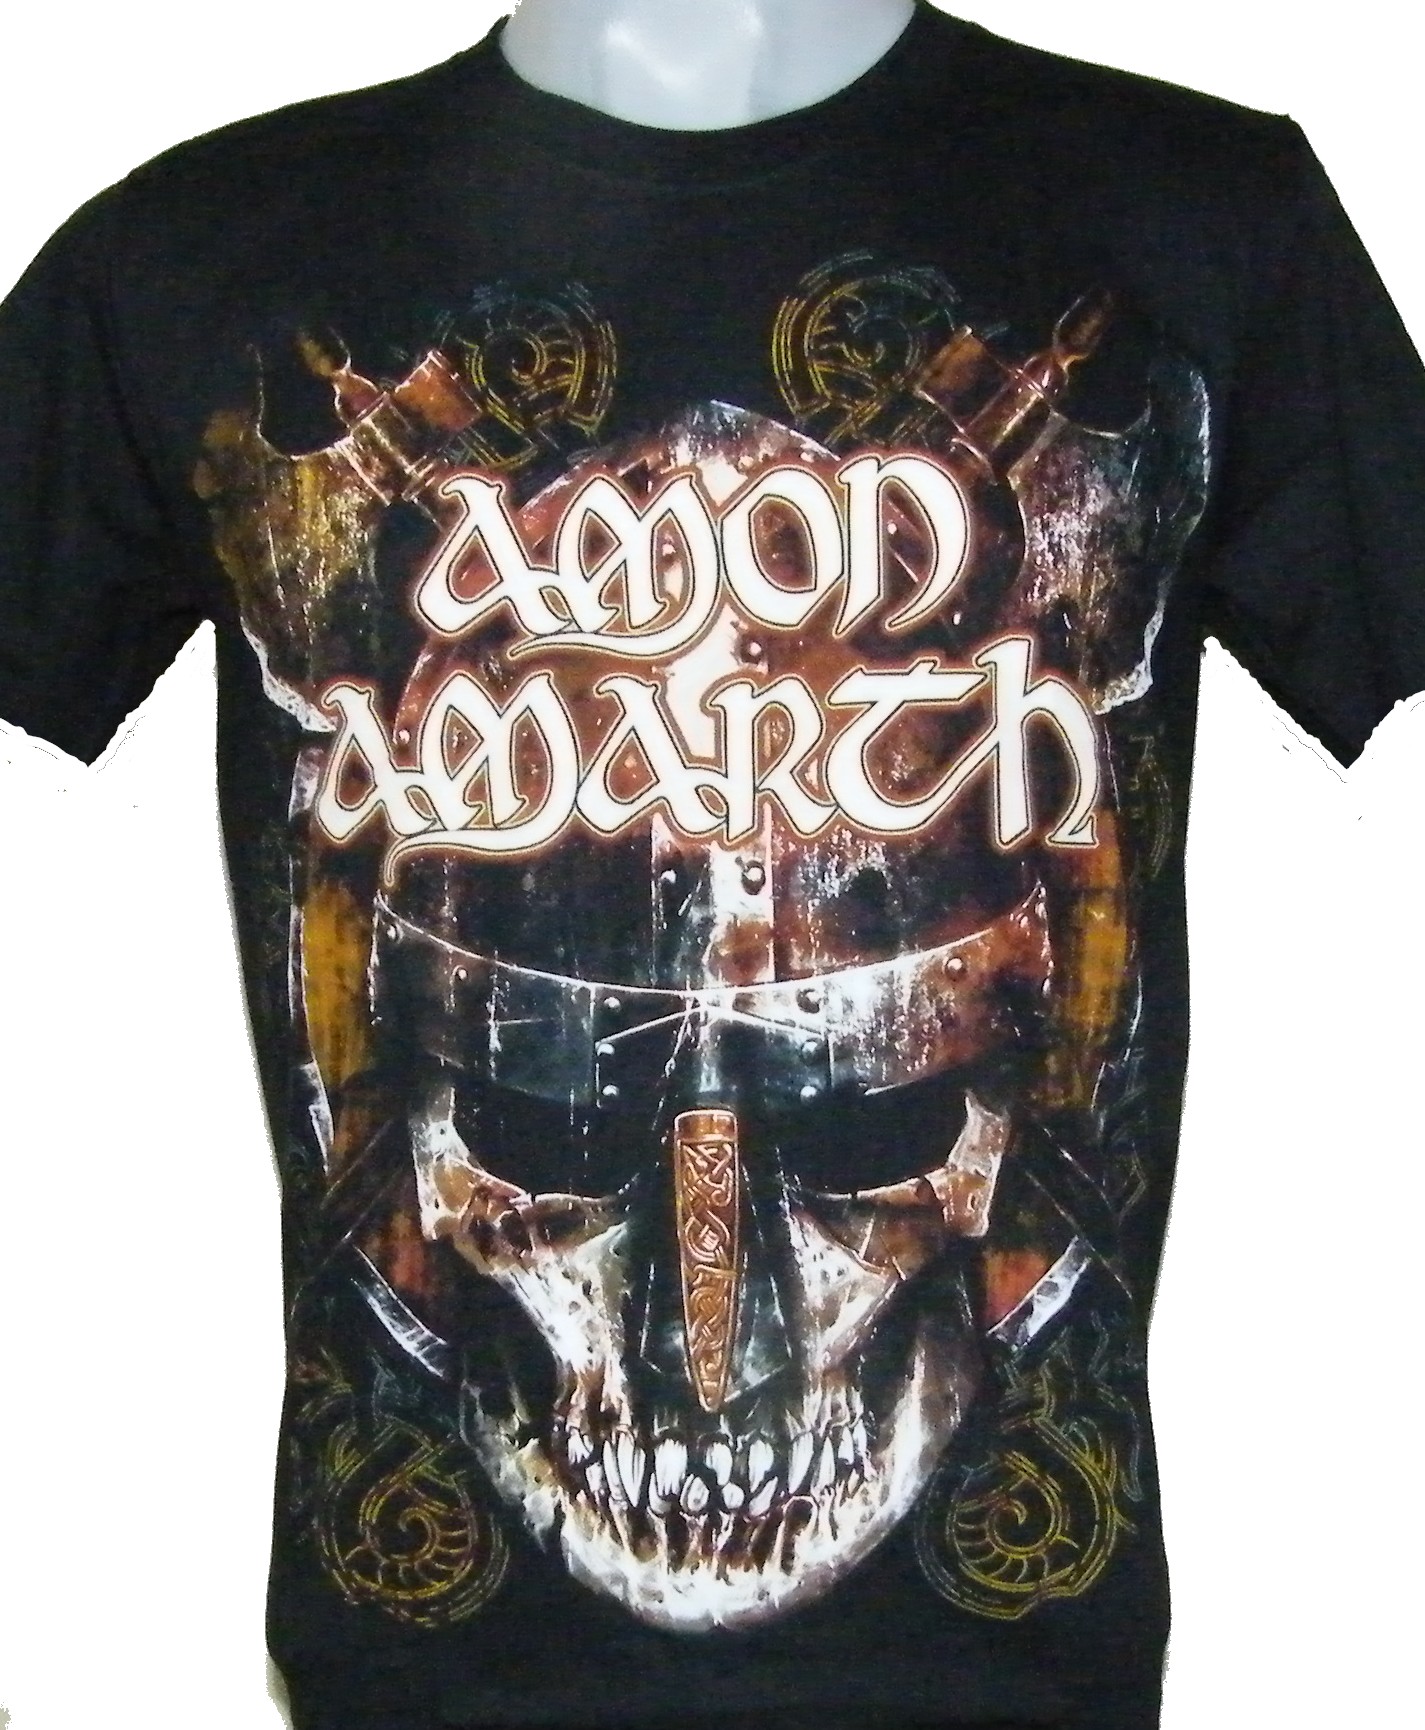 Amon Amarth T Shirt Size M Roxxbkk Amon amarth licensed and official merchandise @ rockmerch.com. amon amarth t shirt size m roxxbkk